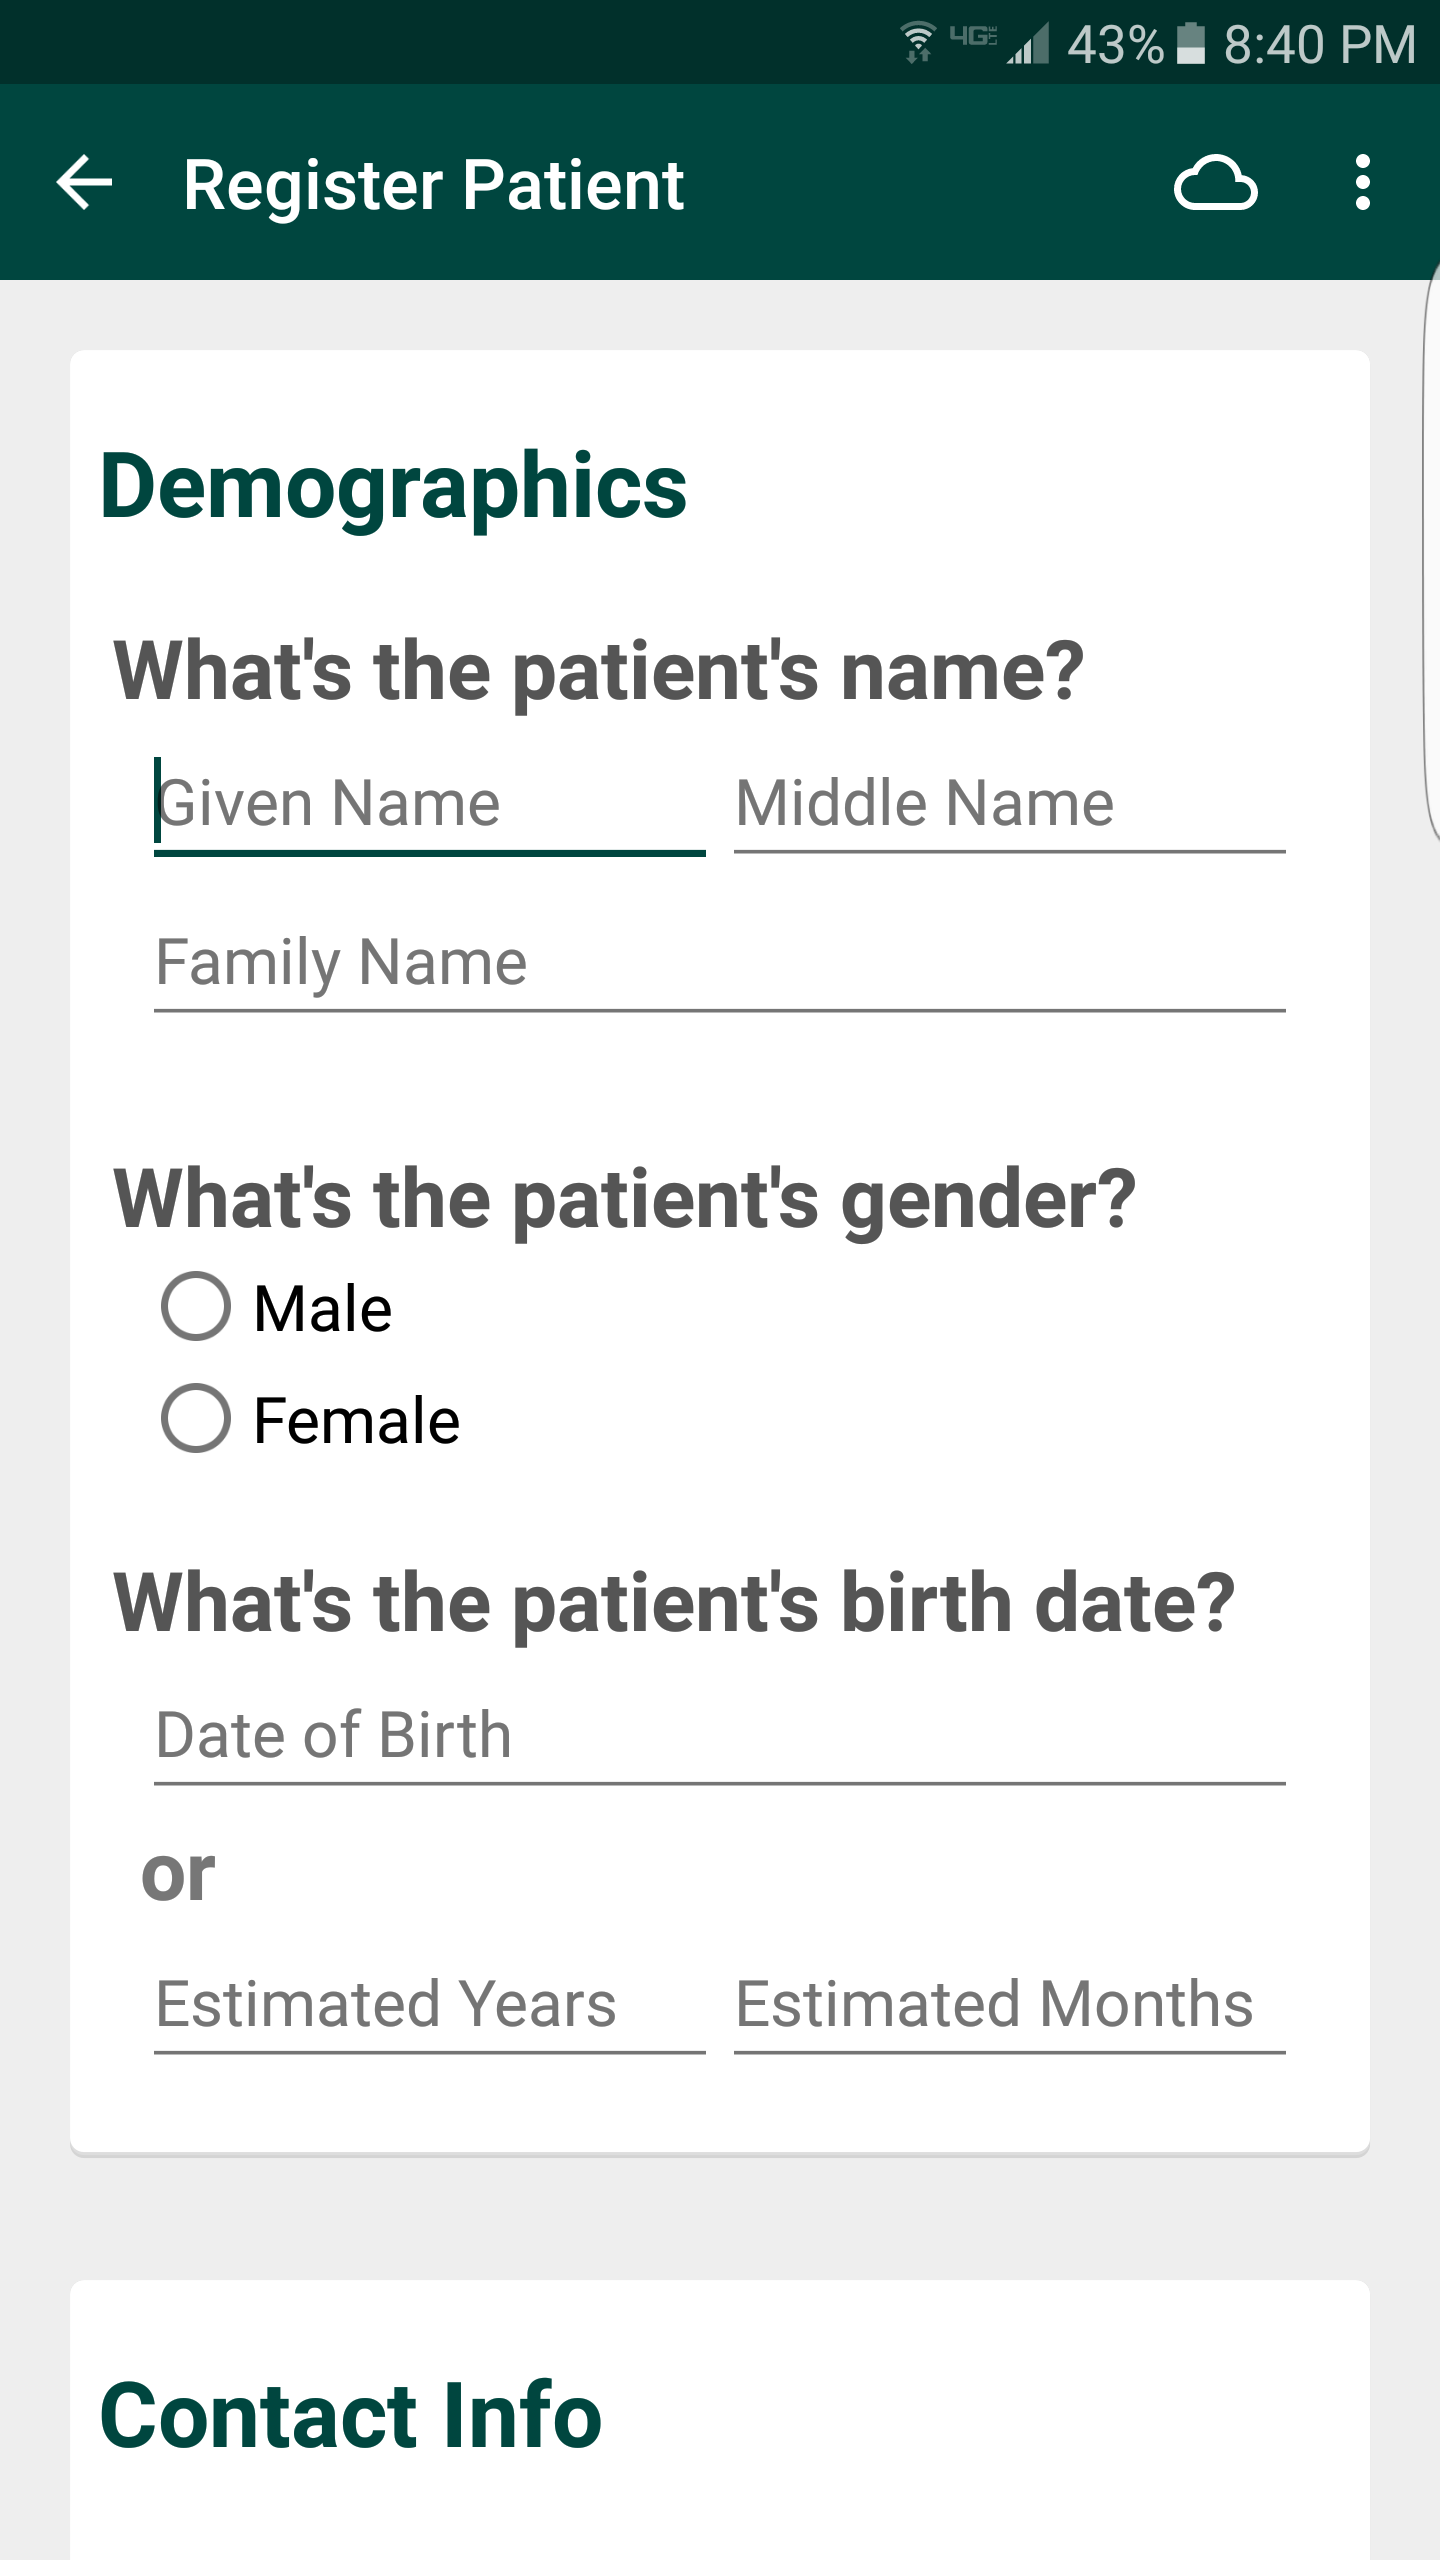 Register Patient